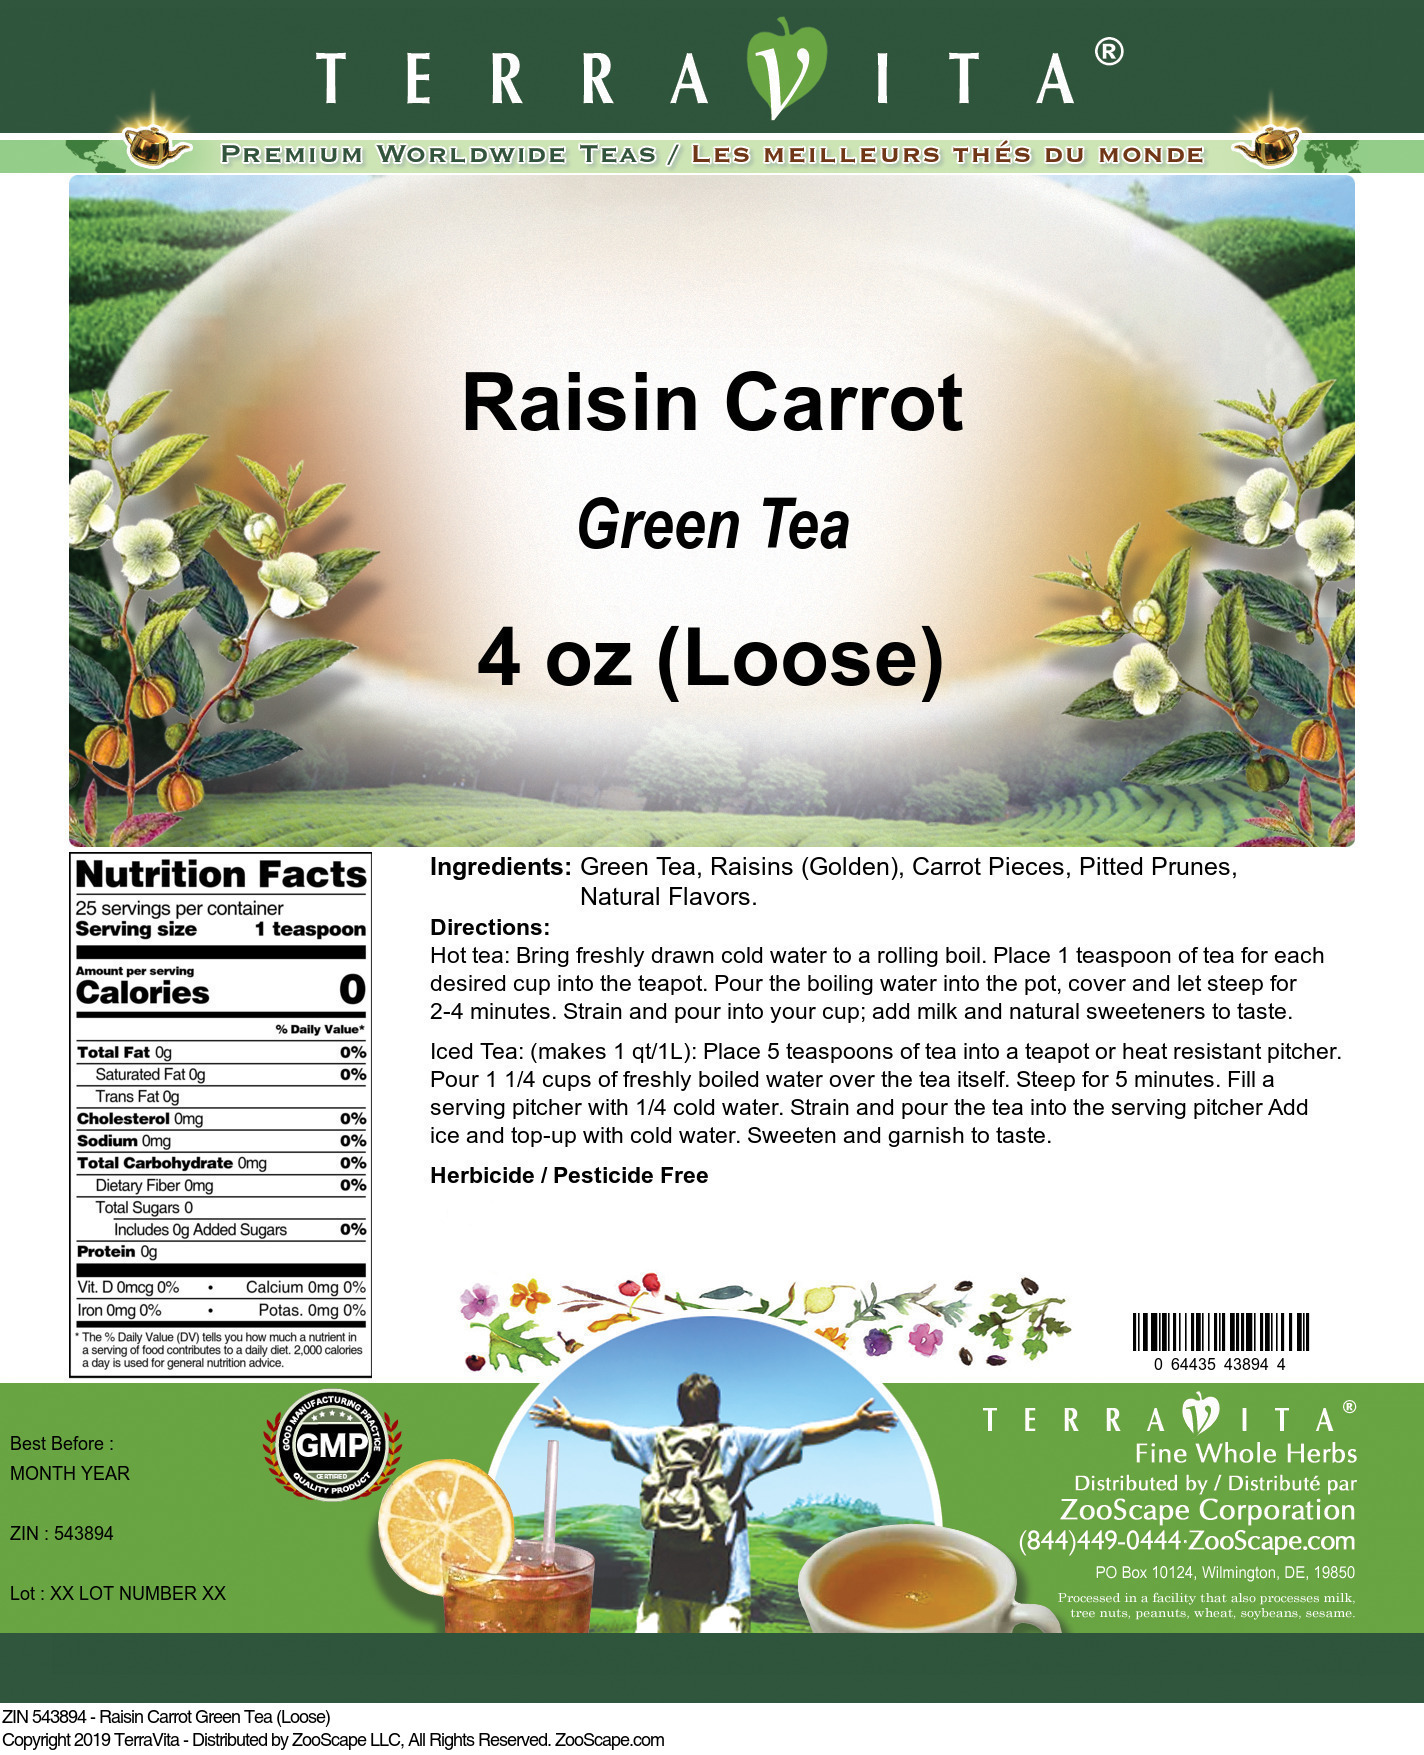 Raisin Carrot Green Tea (Loose) - Label